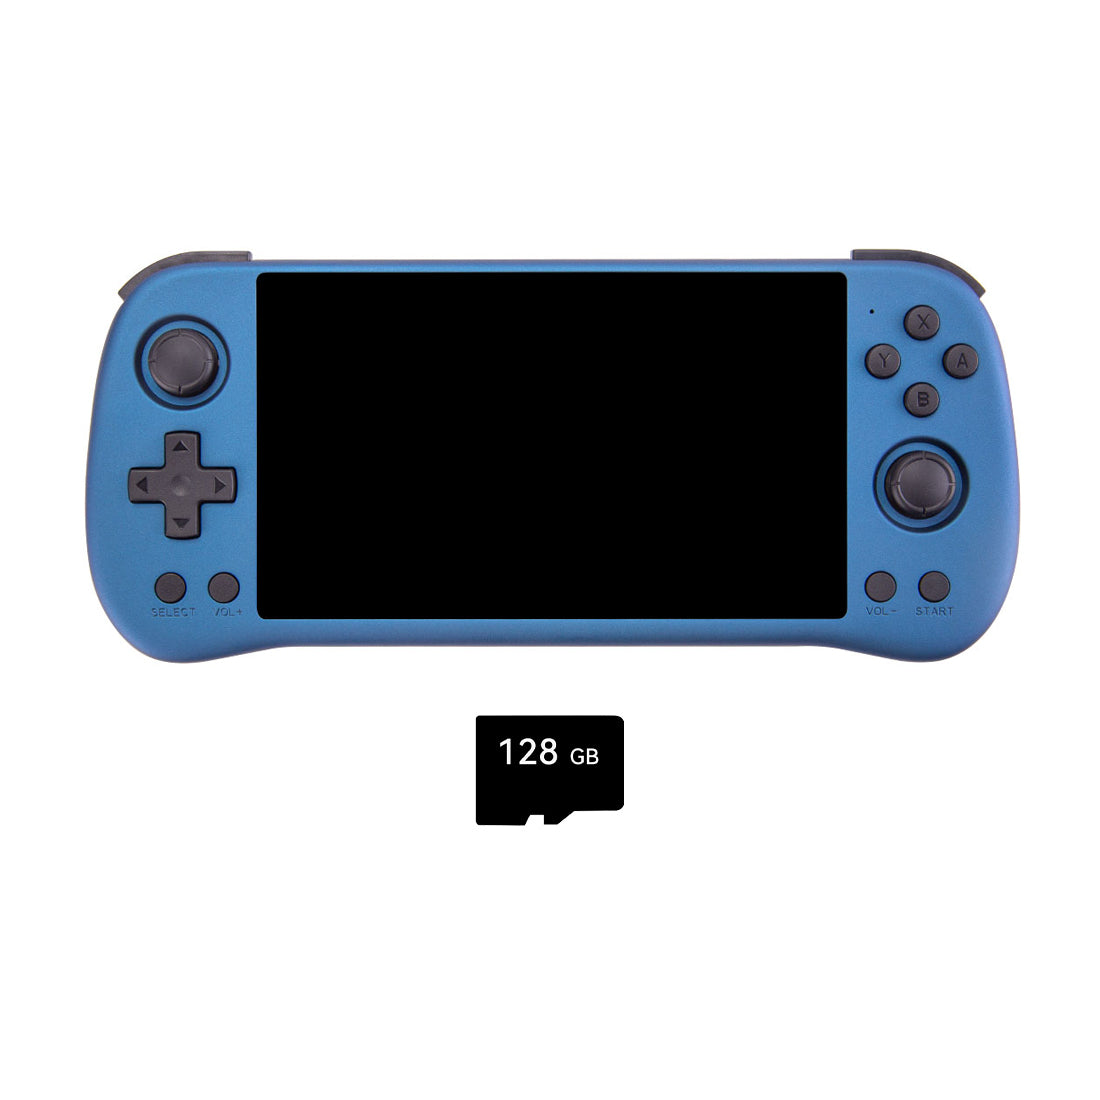 litnxt-powkiddy-x55-large-screen-retro-handheld-game-console-blue-128gb